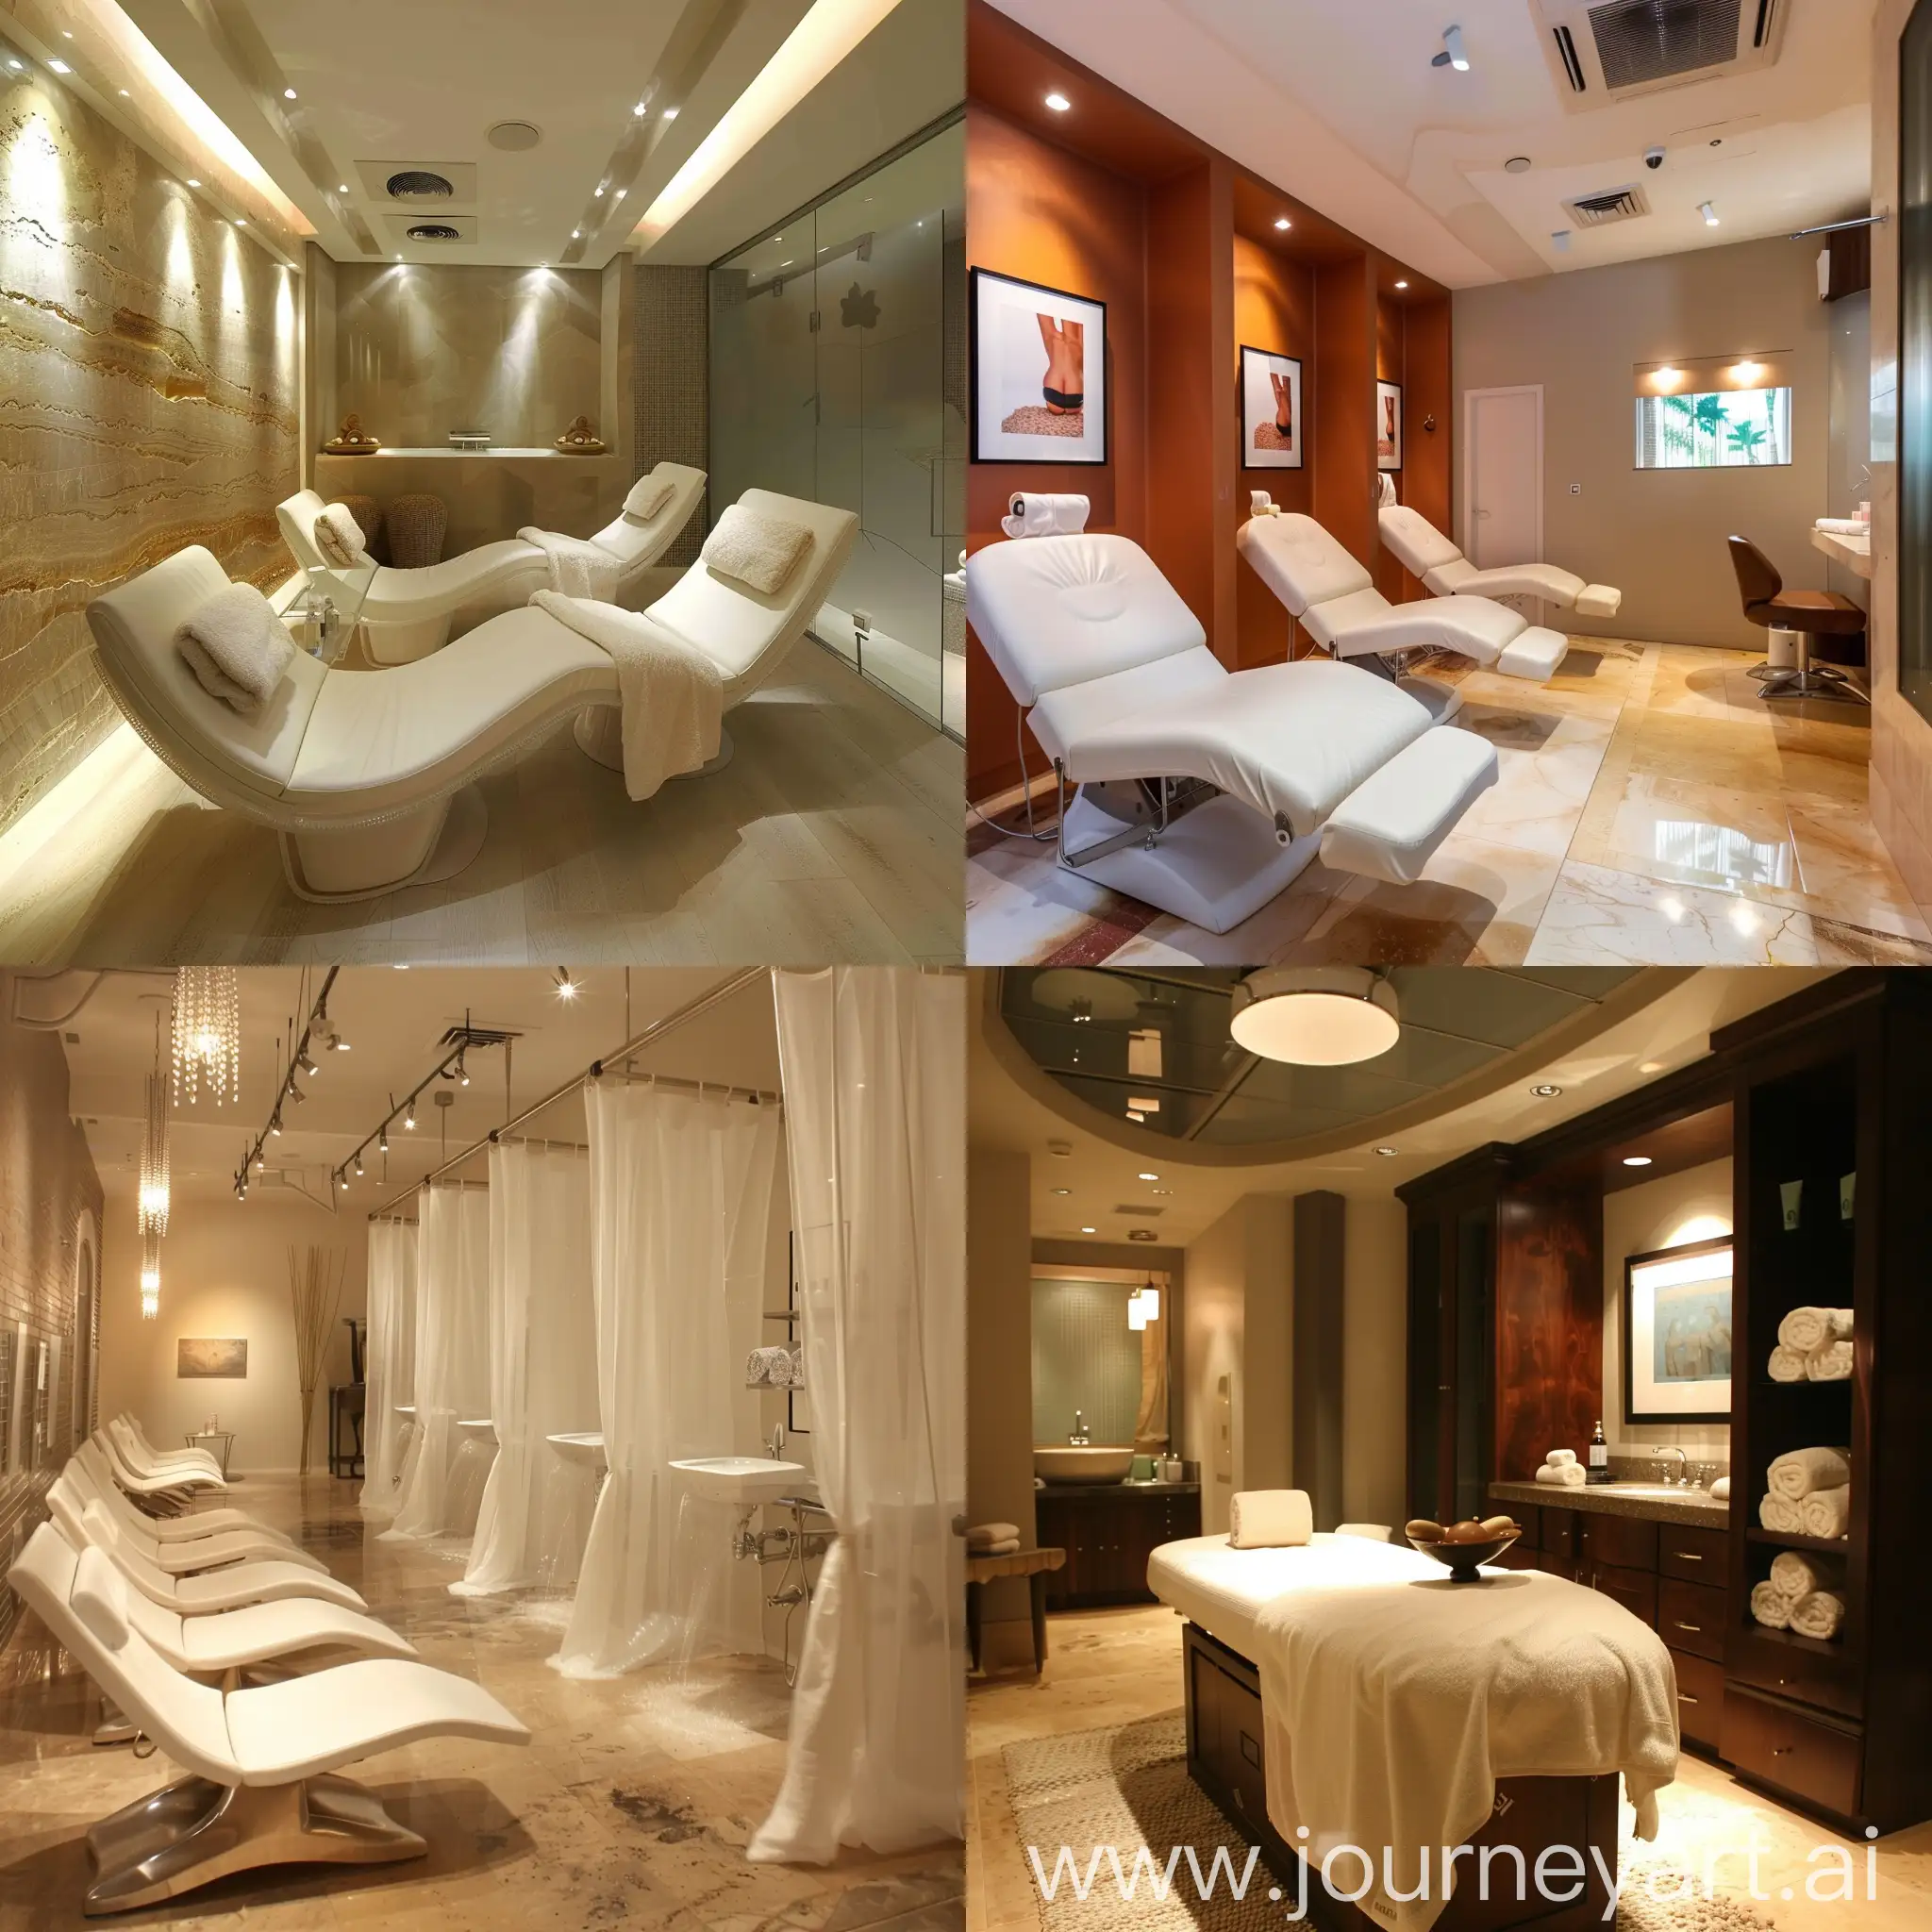 Luxurious-Spa-Salon-Interior-with-Minimalist-Design